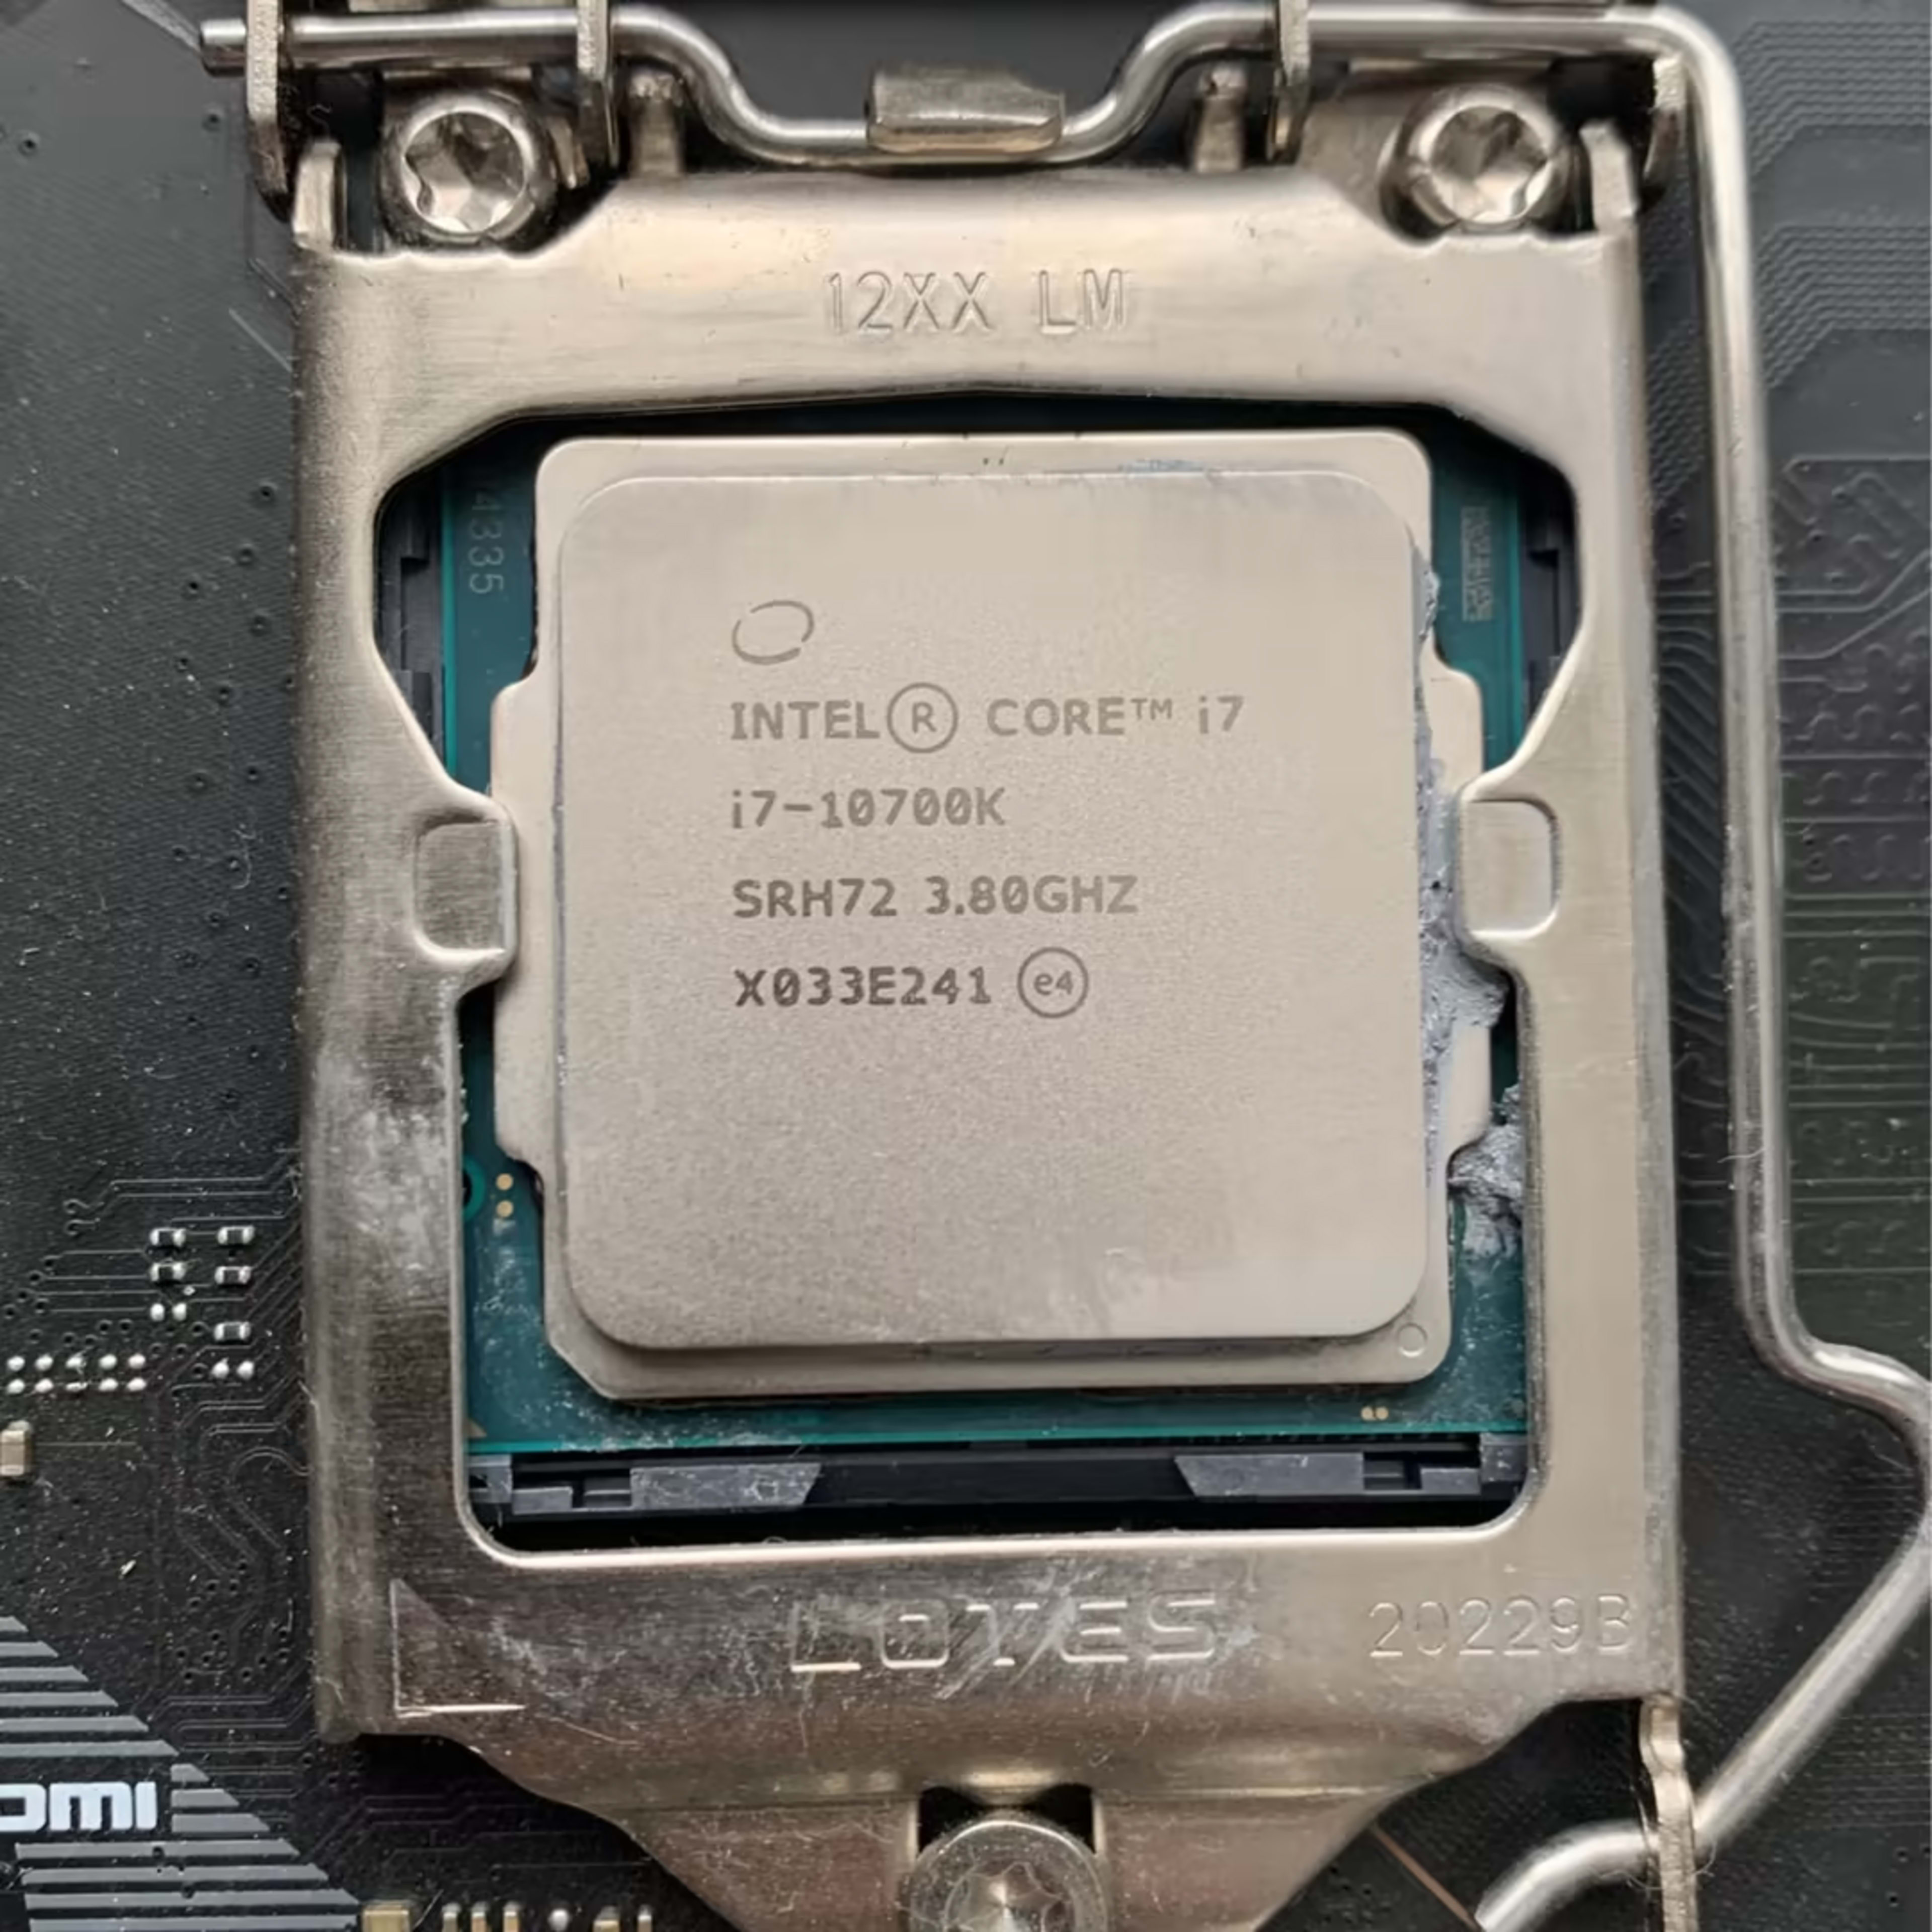 Intel i7-10700K and MSI MPG Z490-M Gaming Edge Wifi motherboard